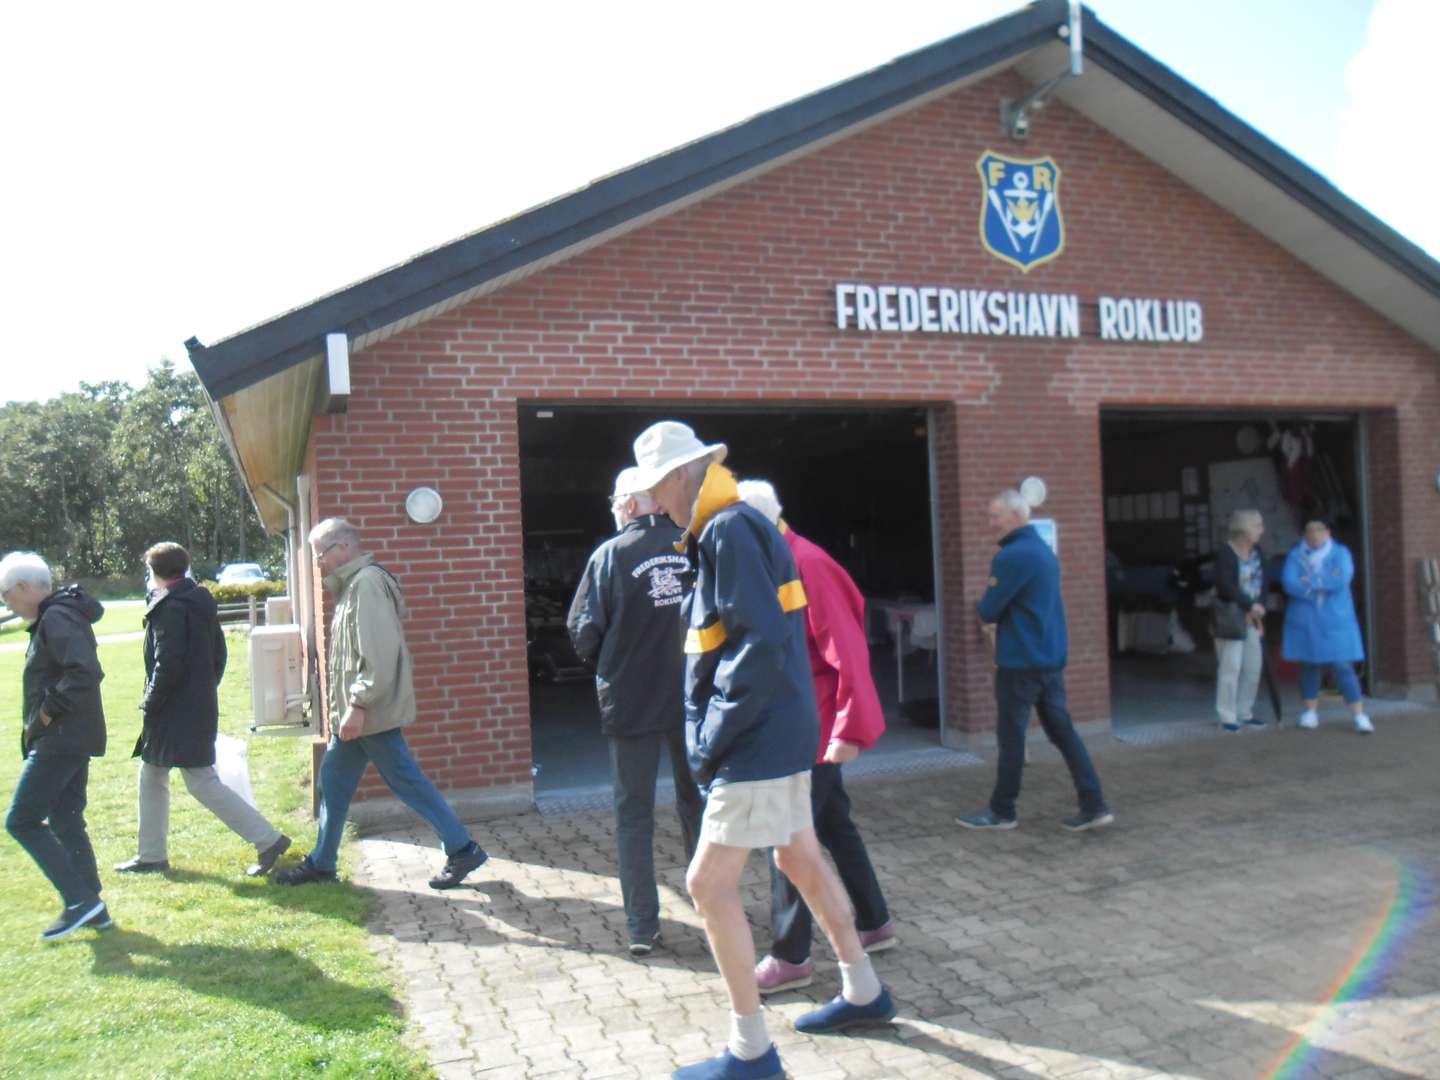 Frederikshavn Roklub